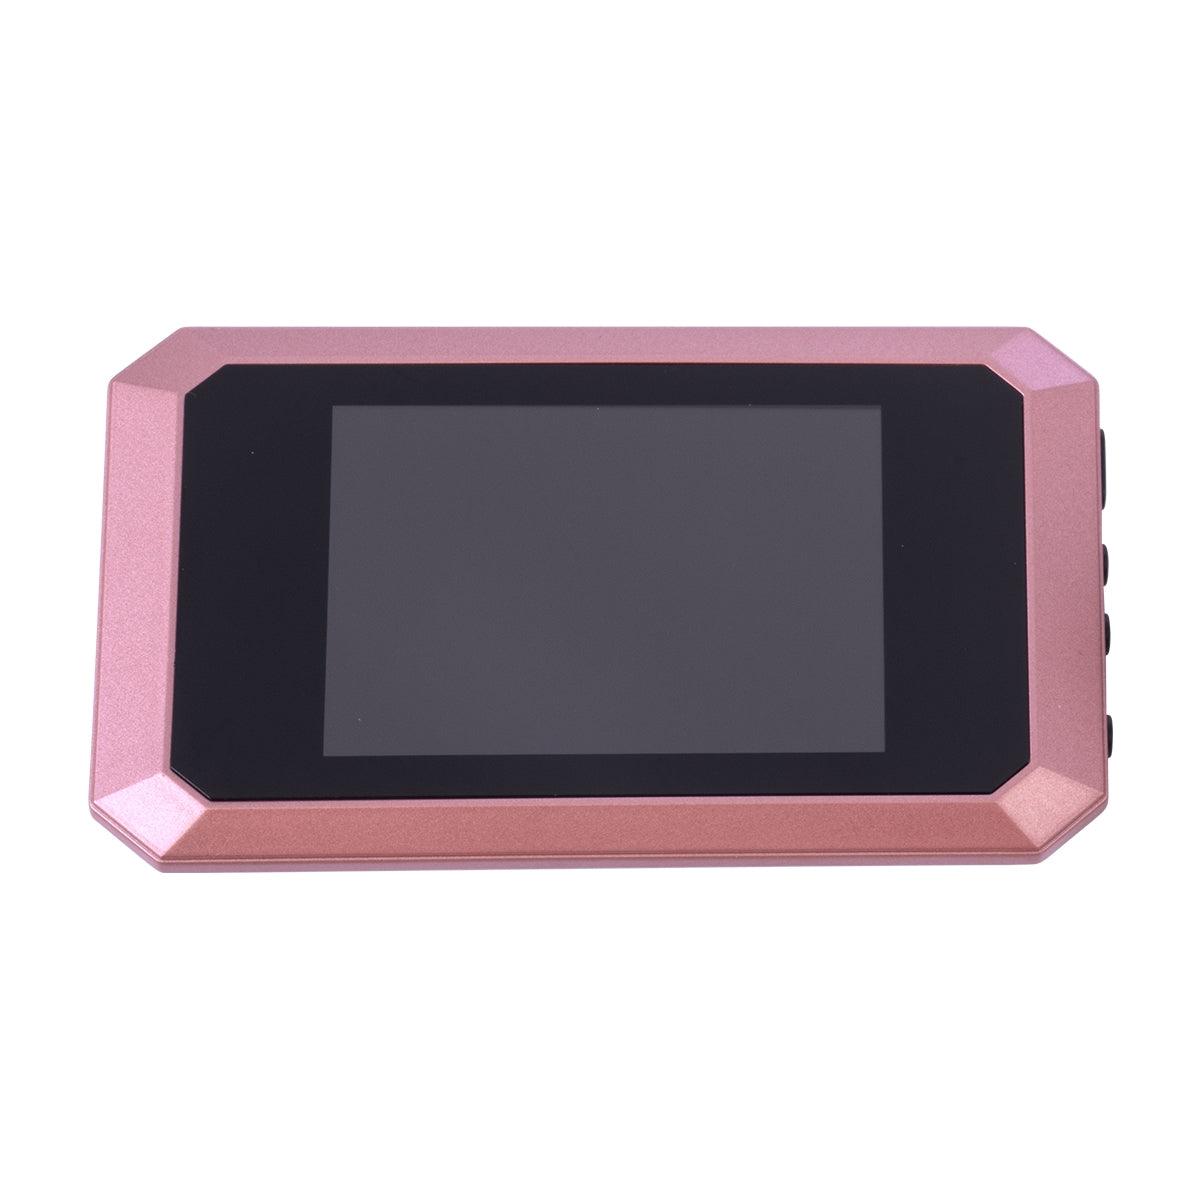 GloboStar® 86064 Επαναφορτιζόμενη Ψηφιακή Έξυπνη Camera Εξώπορτας 90° Μοιρών με Έγχρωμη Οθόνη 4.1" Inches - USB - Νυχτερινή Όραση με LED IR - Κουδούνι - Ροζ - ledmania.gr